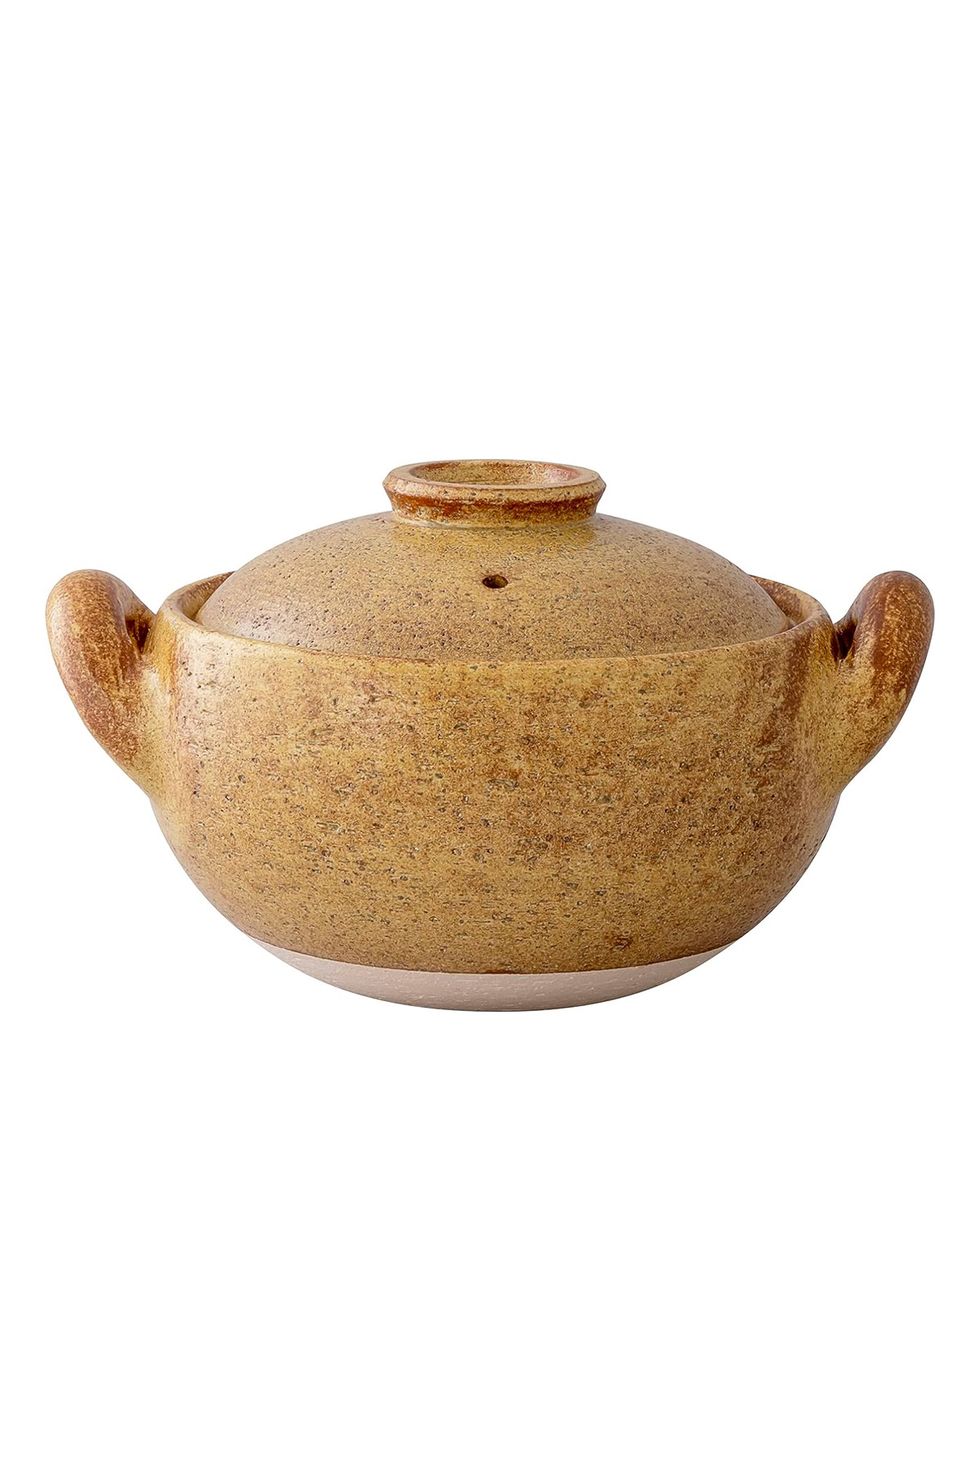 a brown ceramic pot